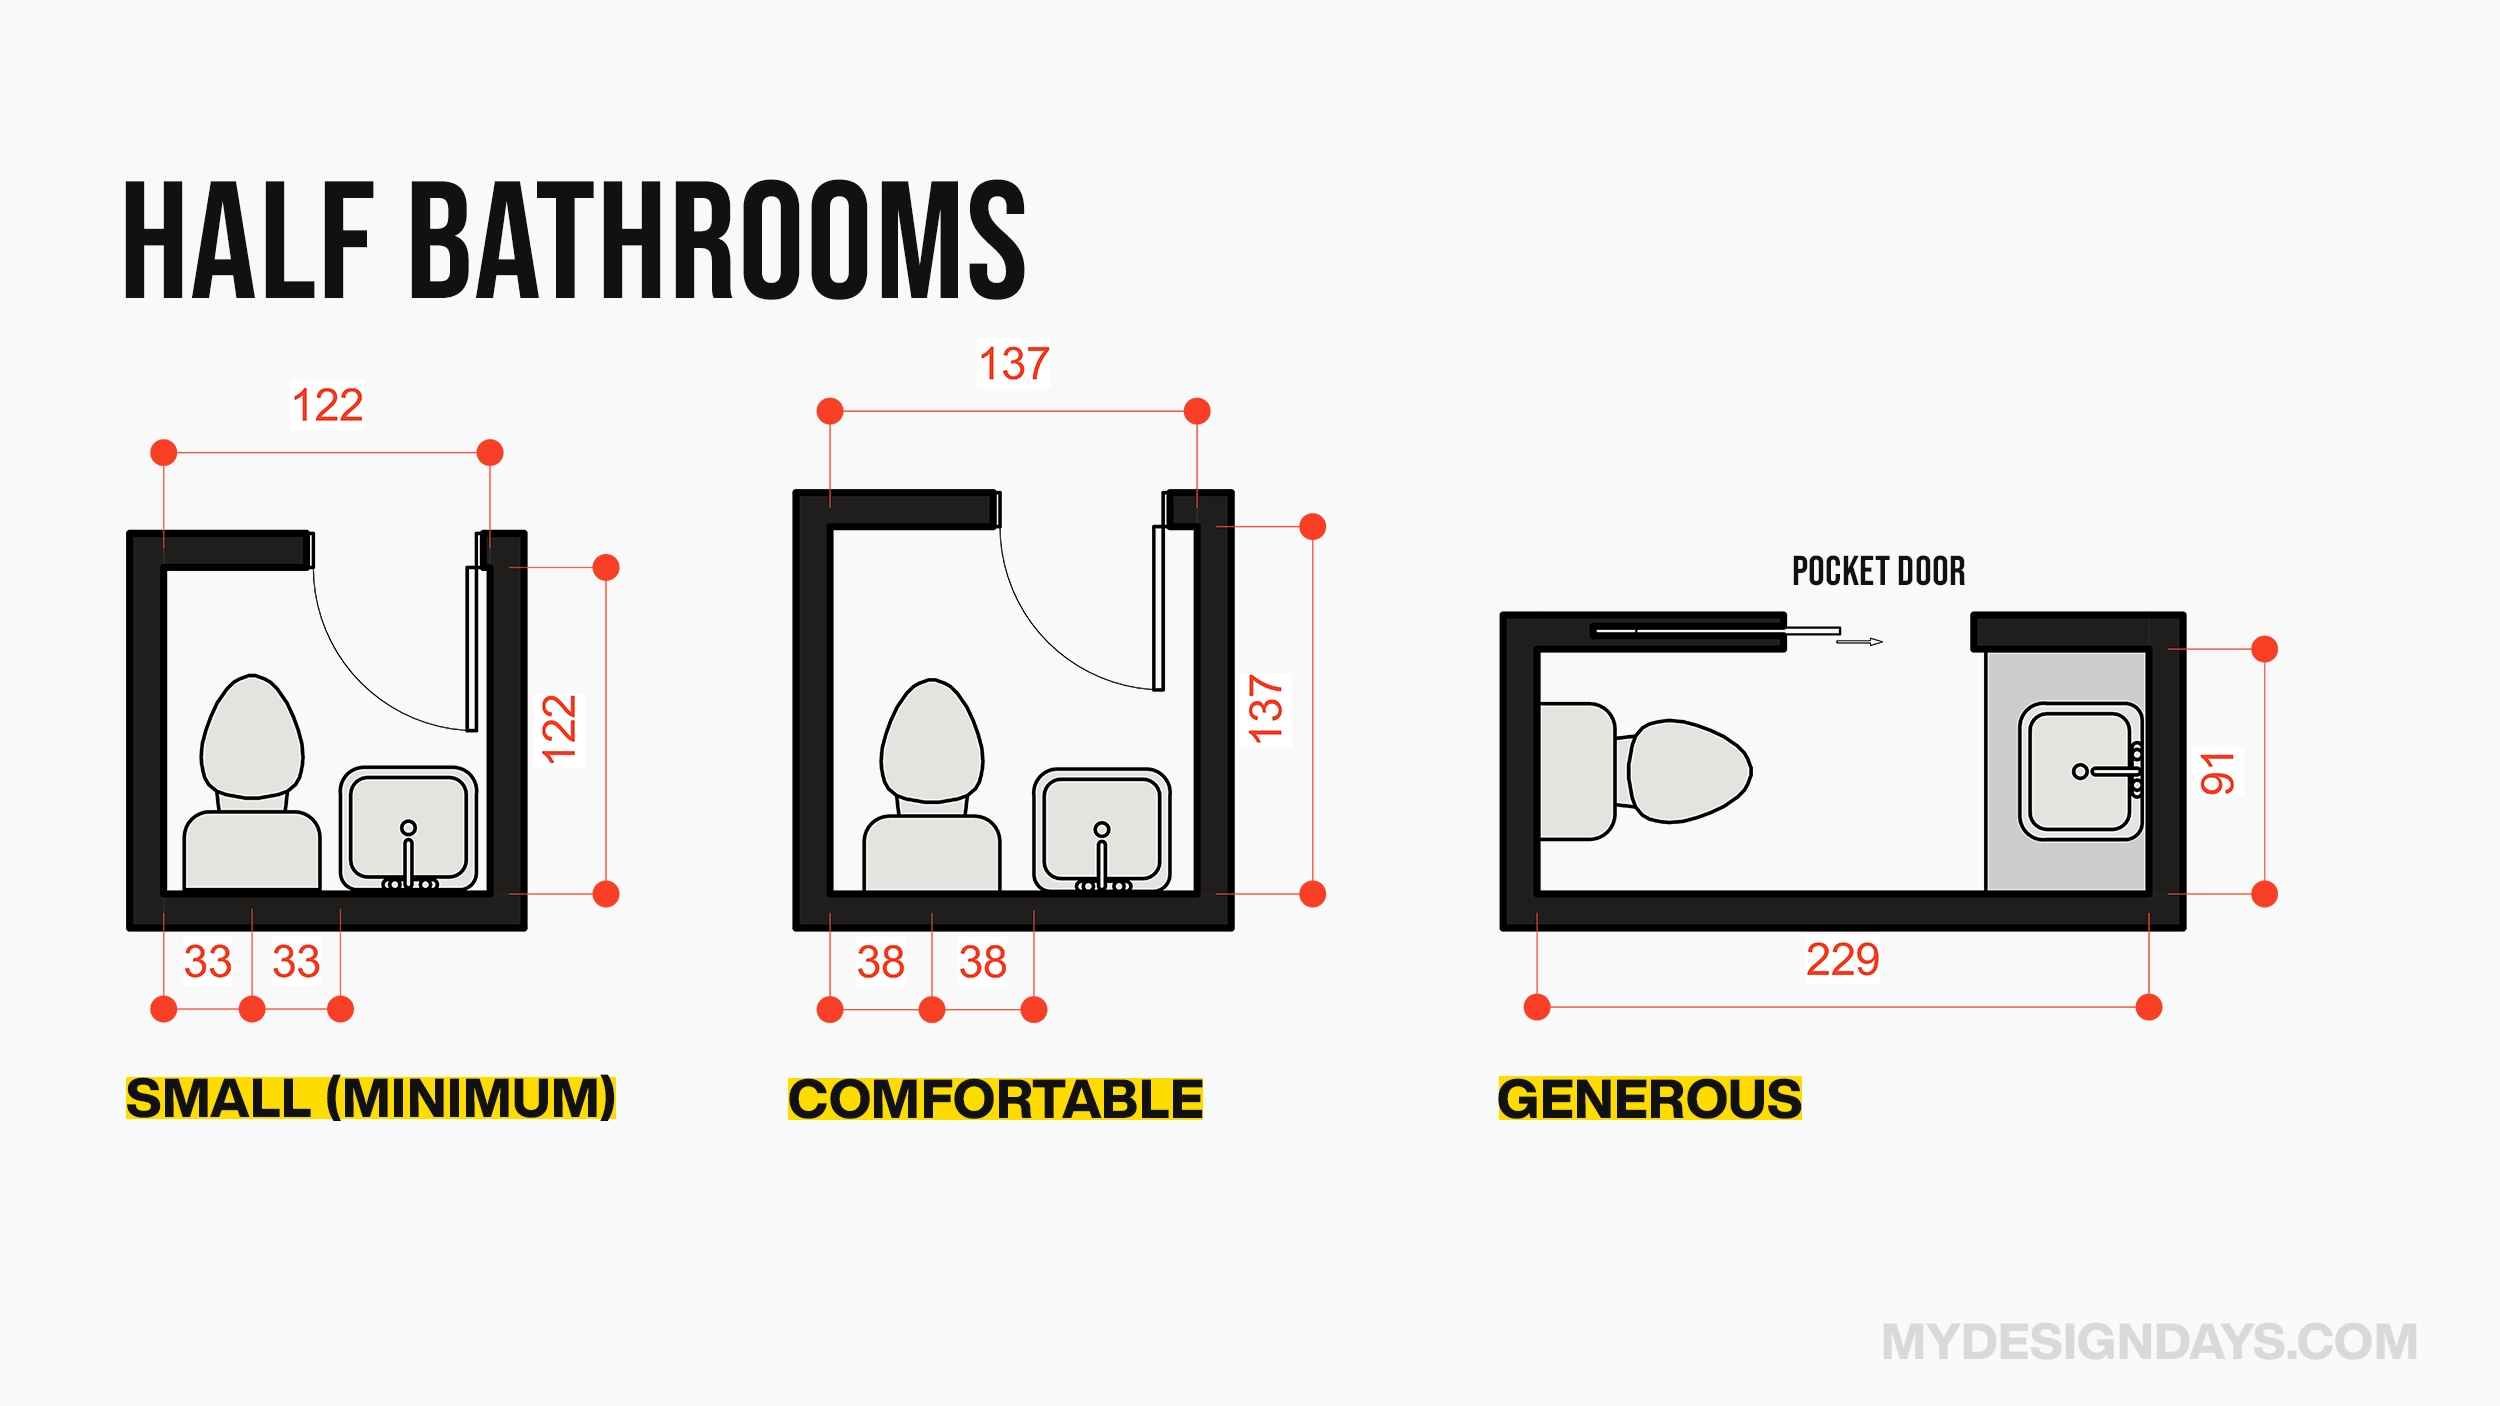 Half bathroom layouts in CMS